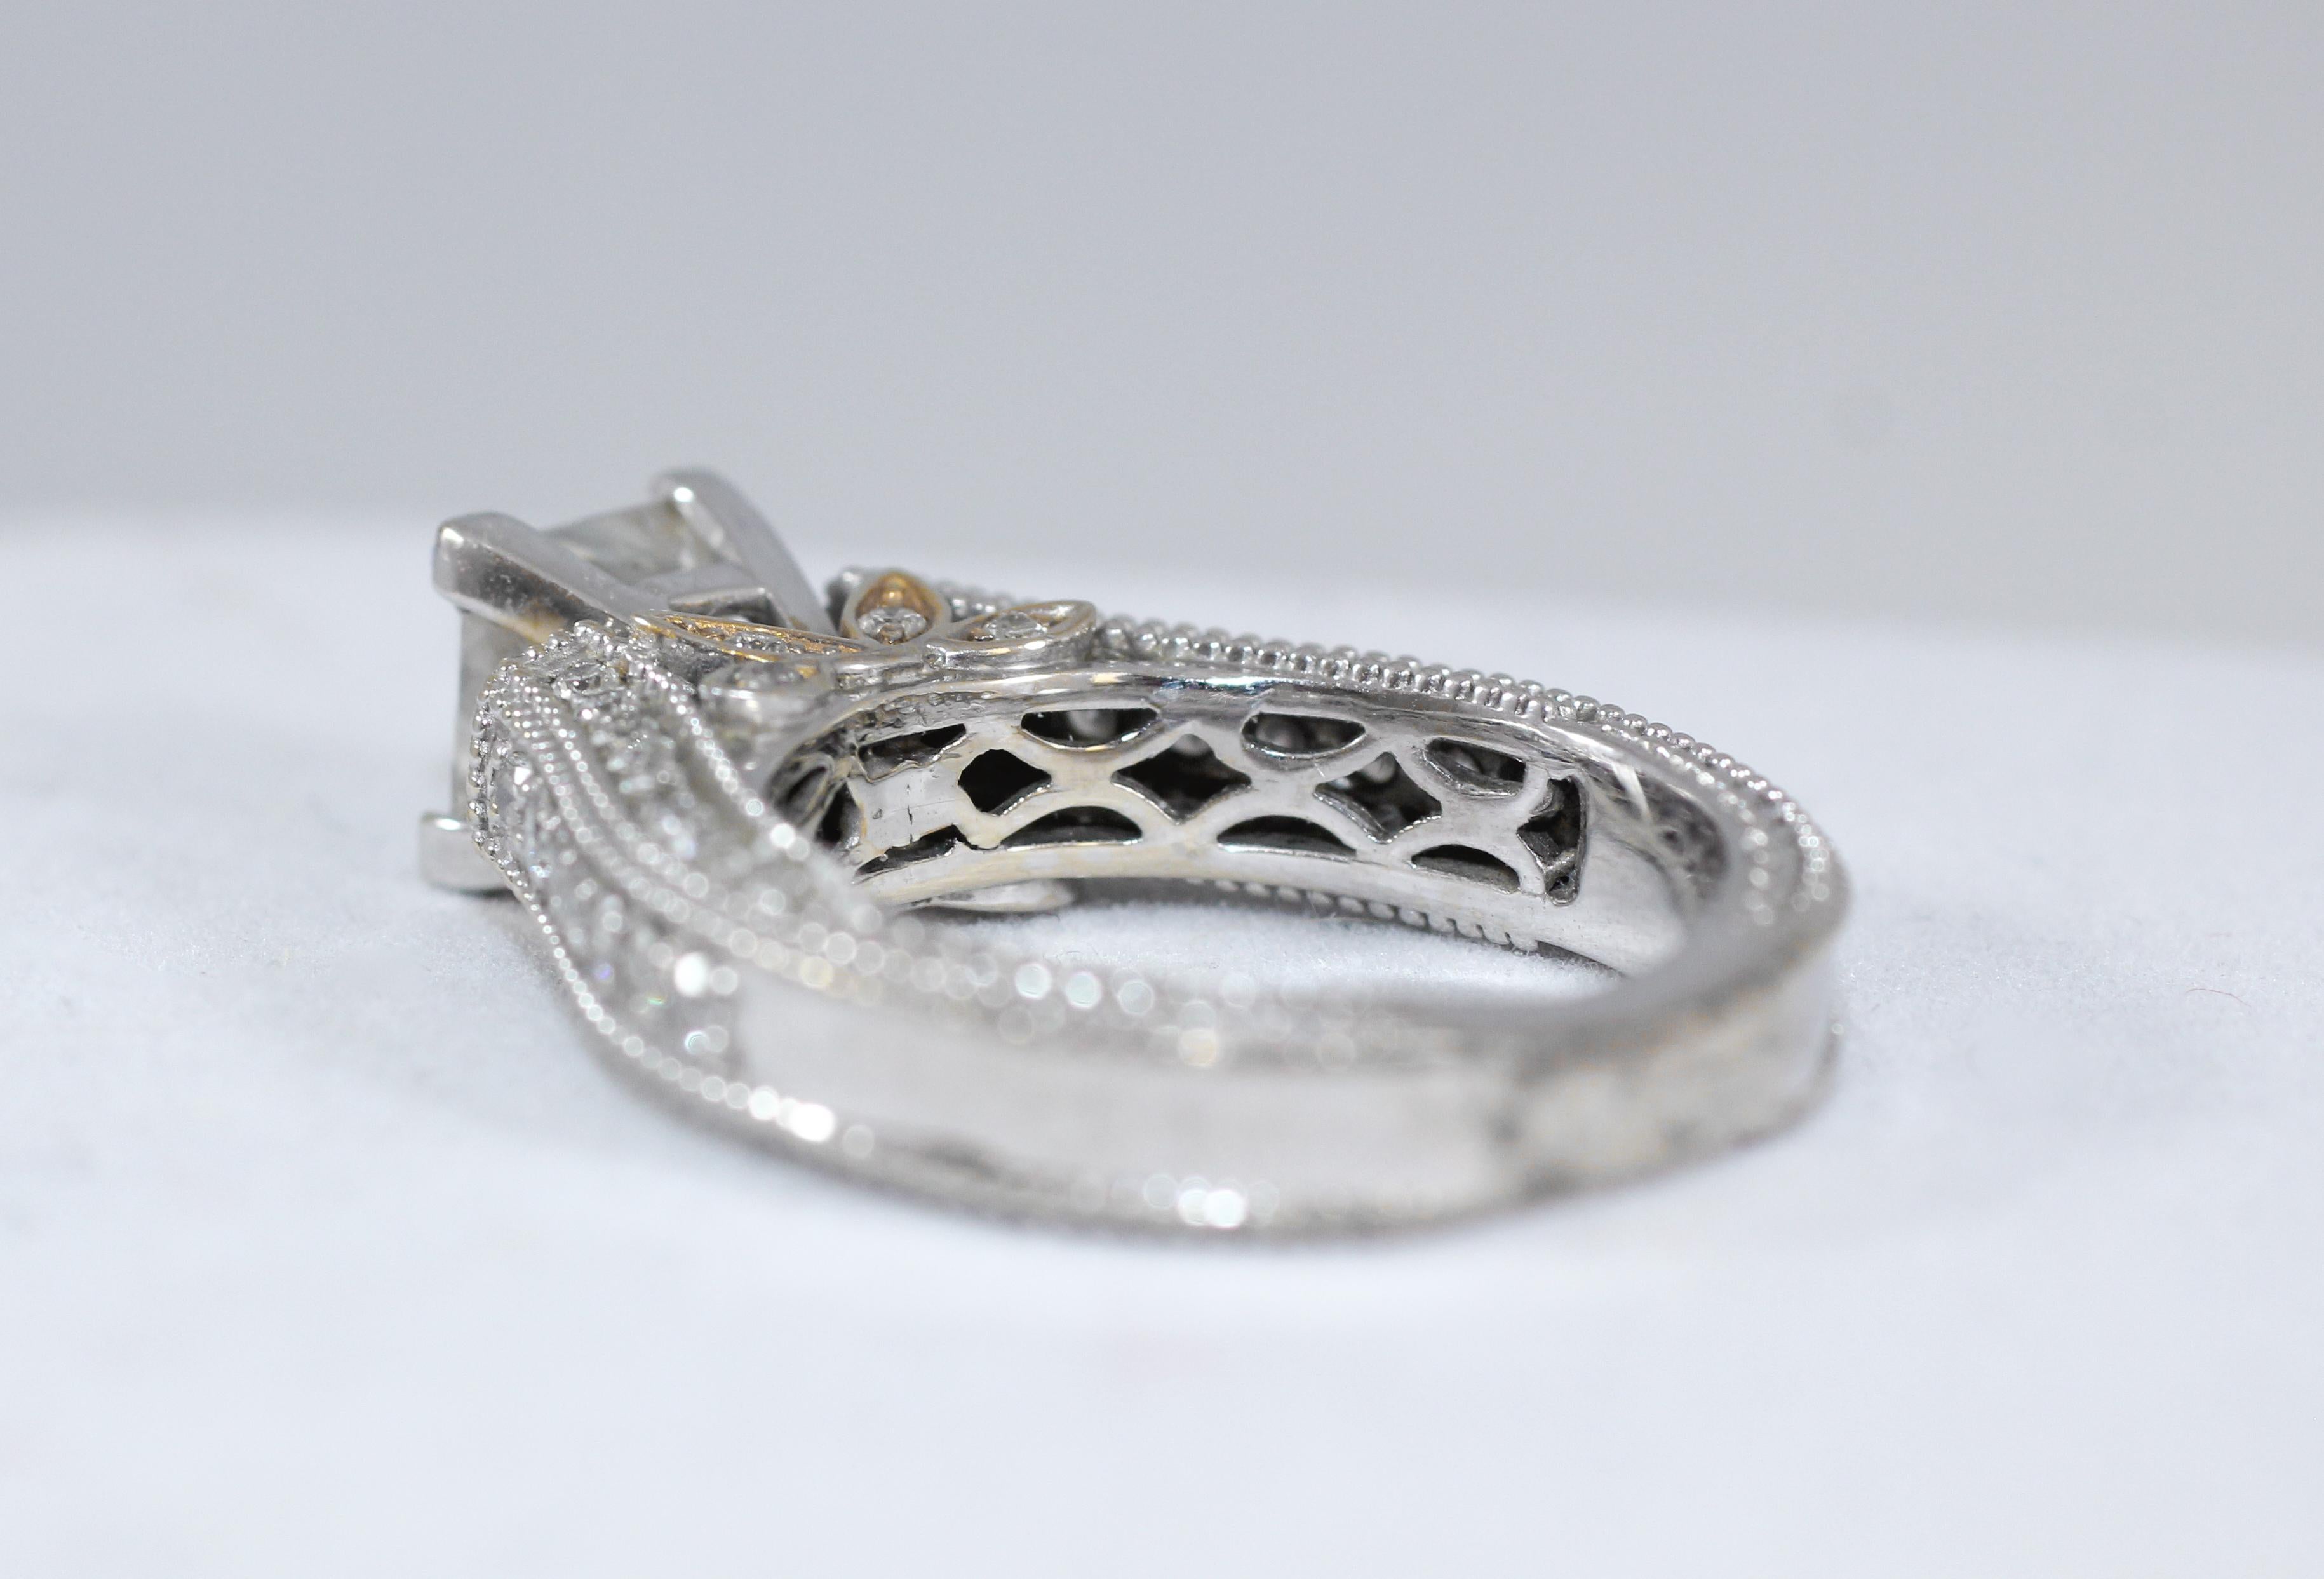 1.7 carat round diamond engagement ring